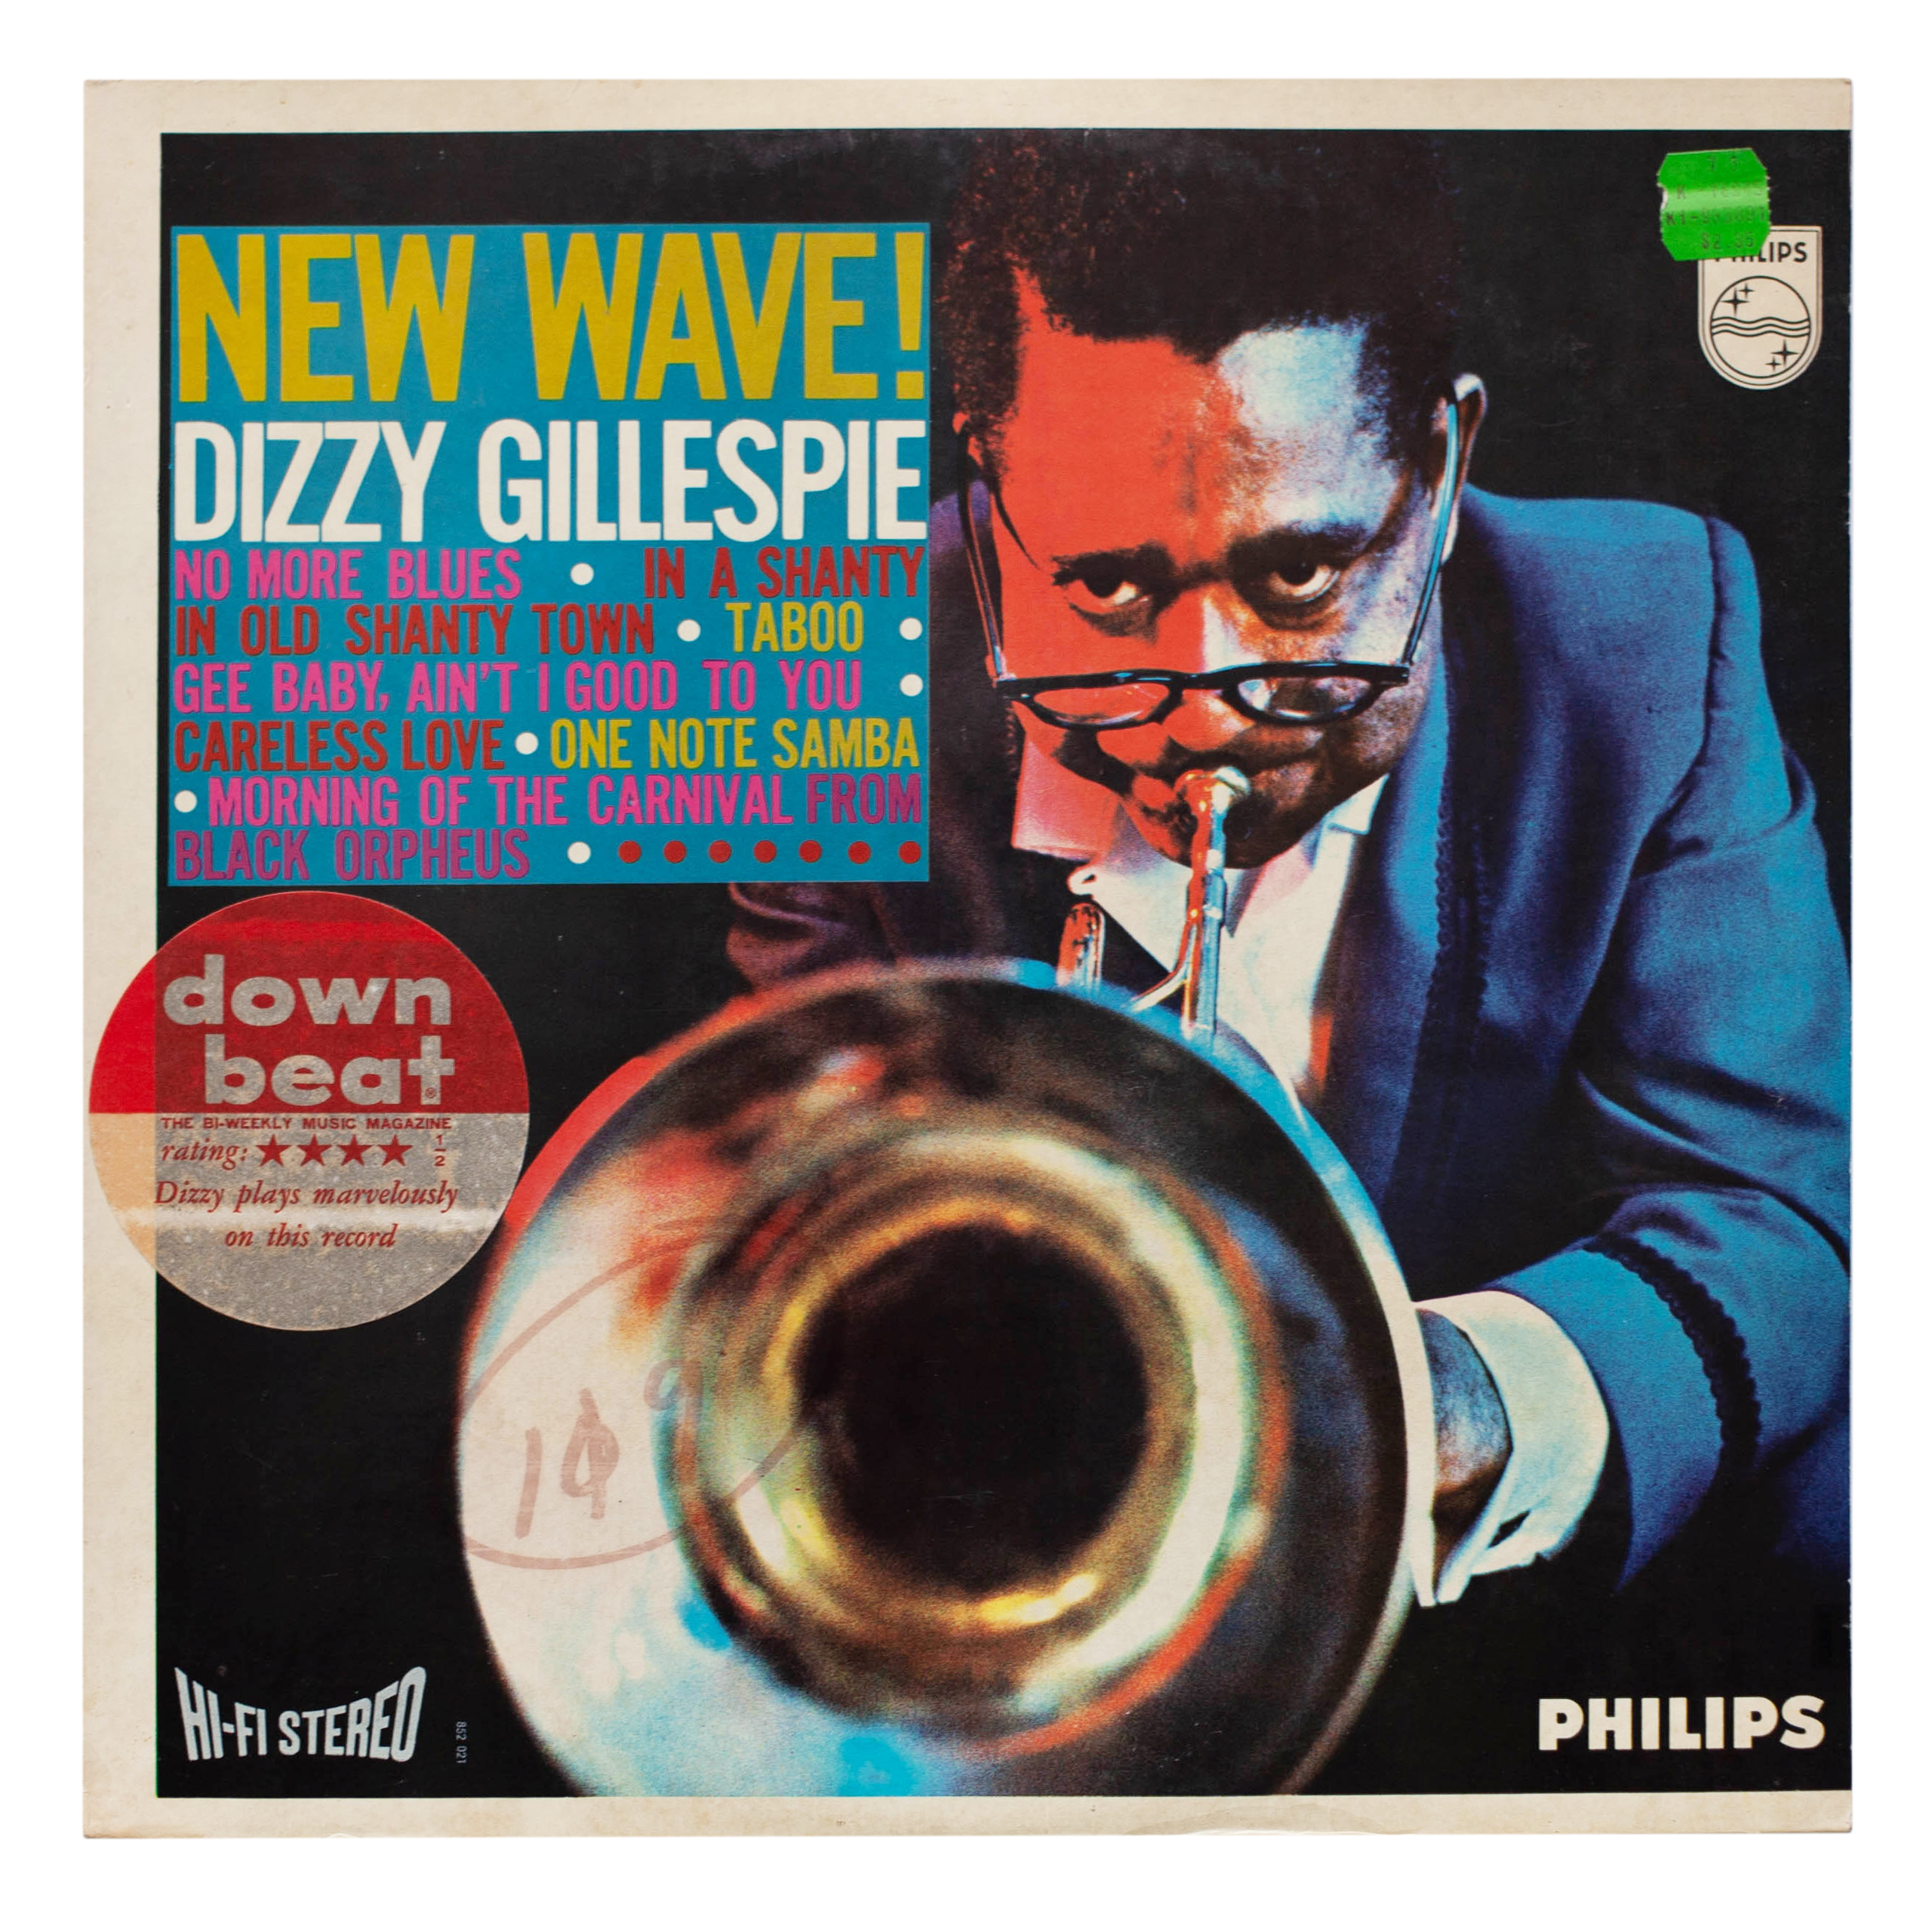 Винил New Wave - Dizzy Gillespie SV New Wave - Dizzy Gillespie, размер One Size - фото 1